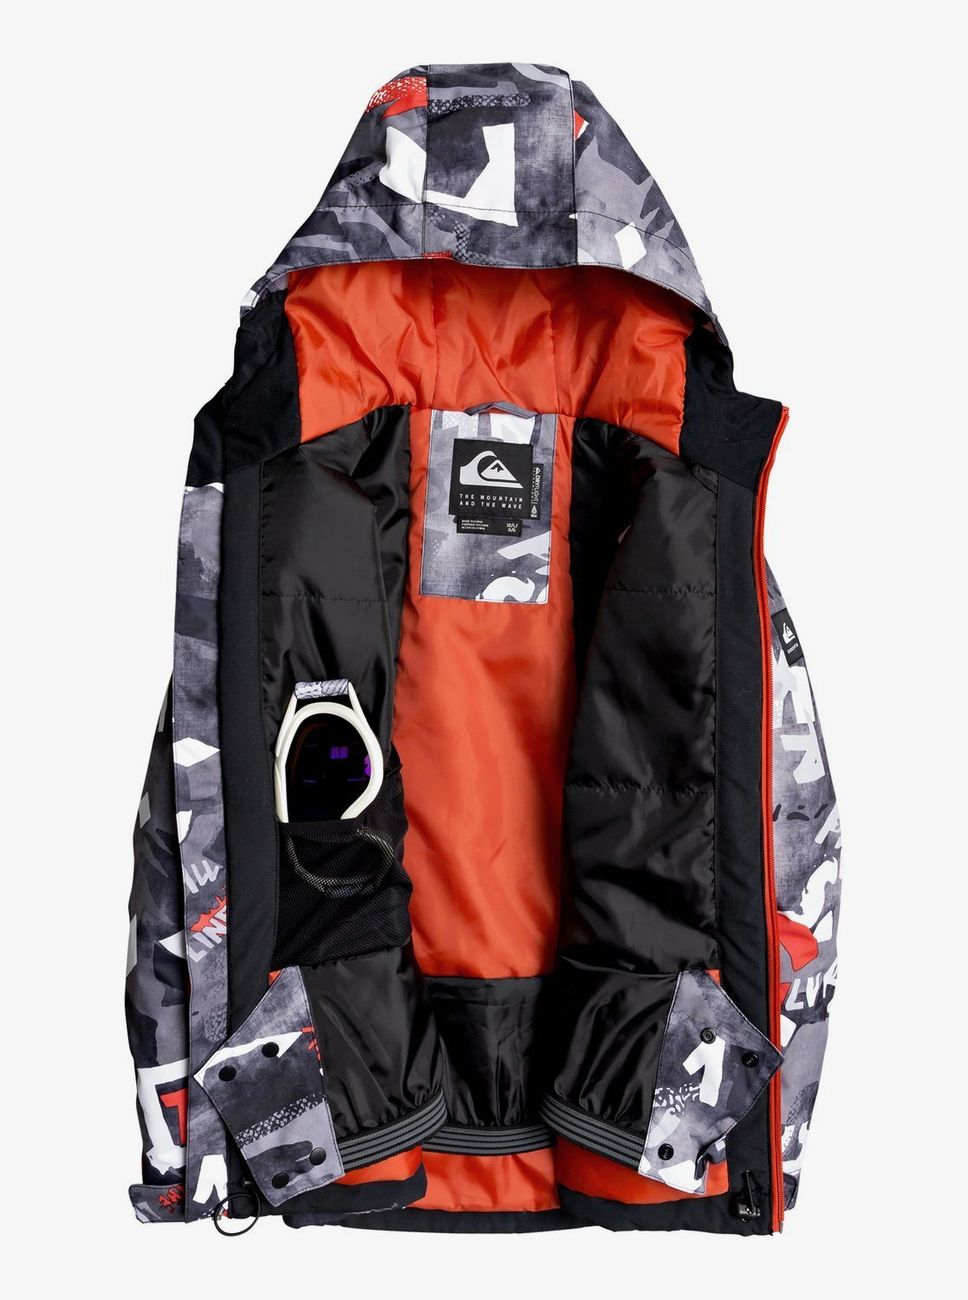 Сноубордическая куртка Quiksilver ( EQBTJ03098 ) MIS PRIN YOU JK B SNJT 2020 NZG1 Poinciana-Plaid_1 M (3613374523890)